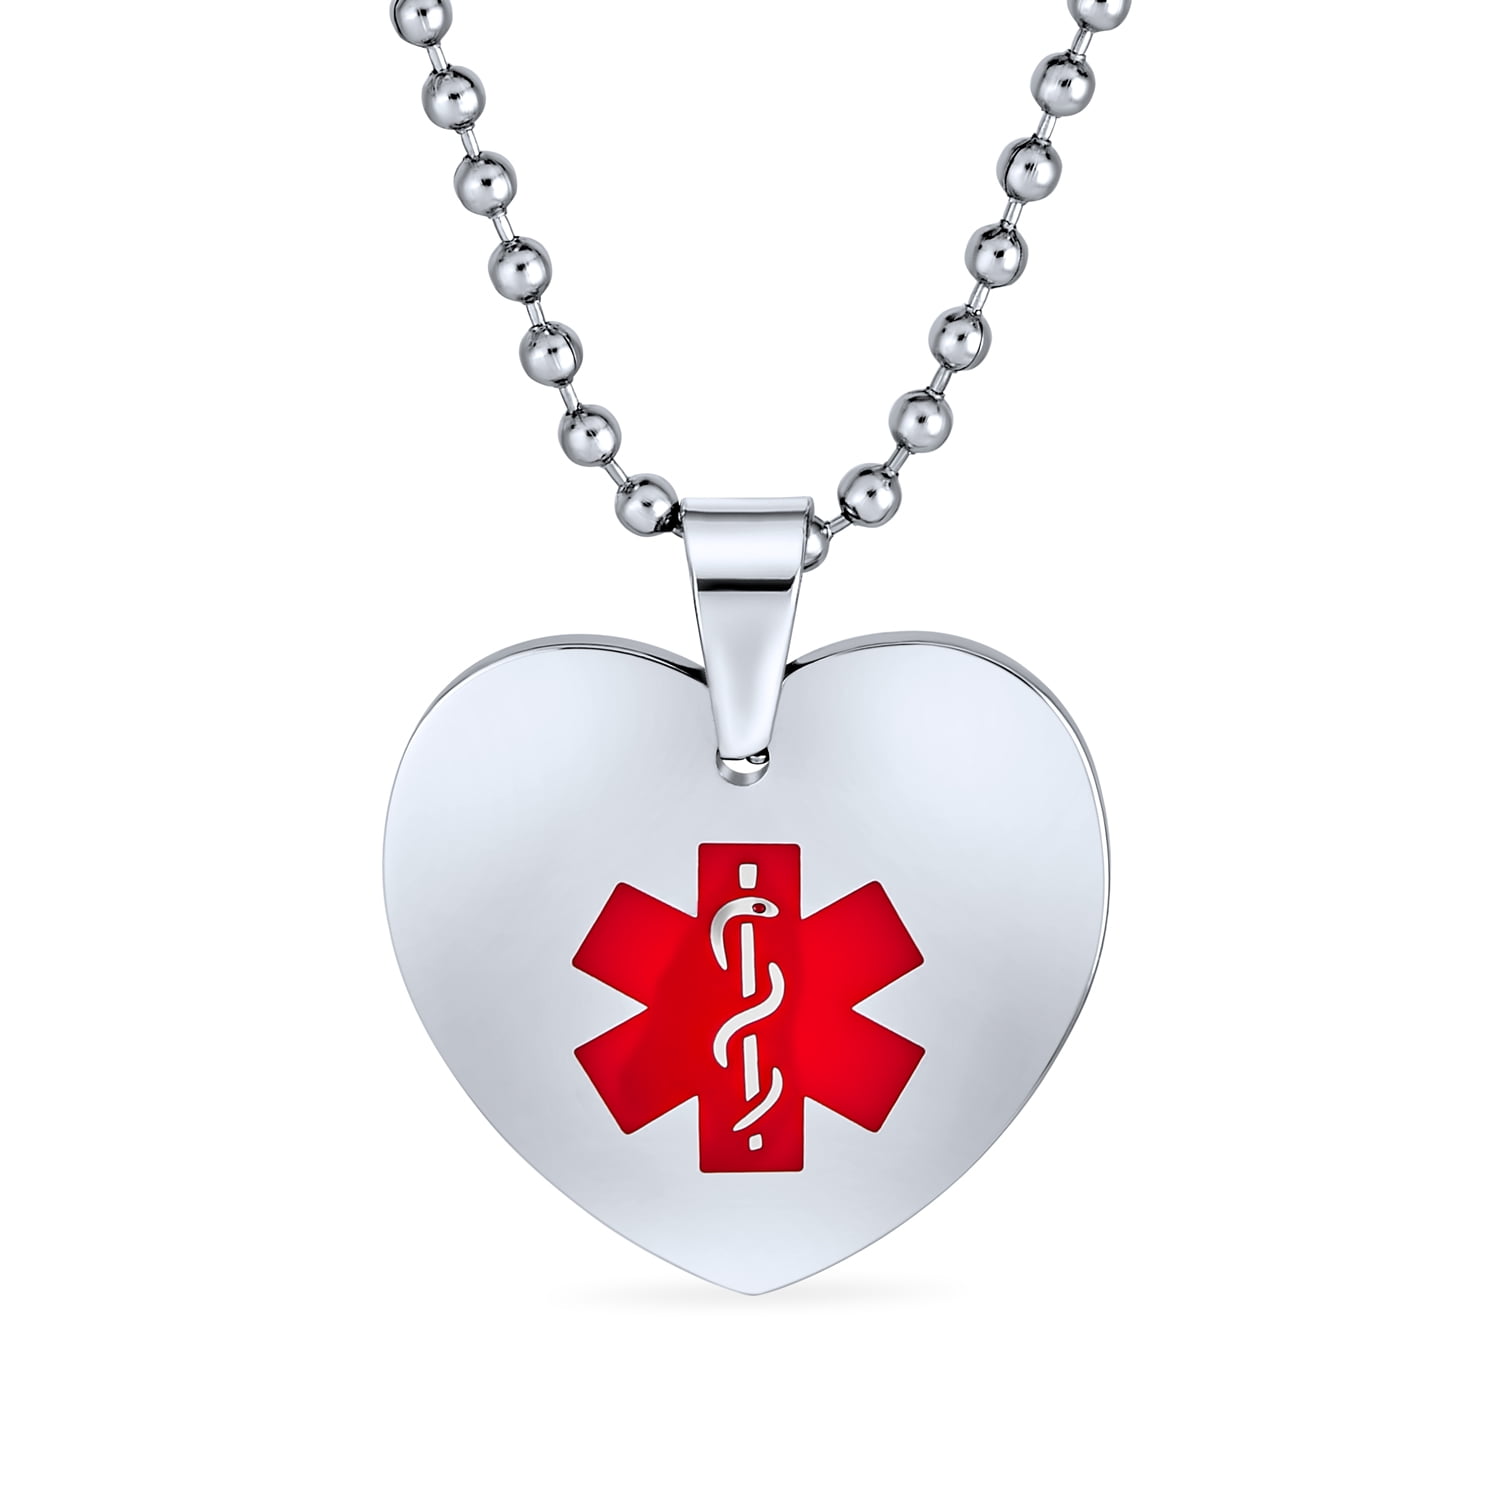 Diabetes necklace diamond heart diamond necklace medical warning necklace, 